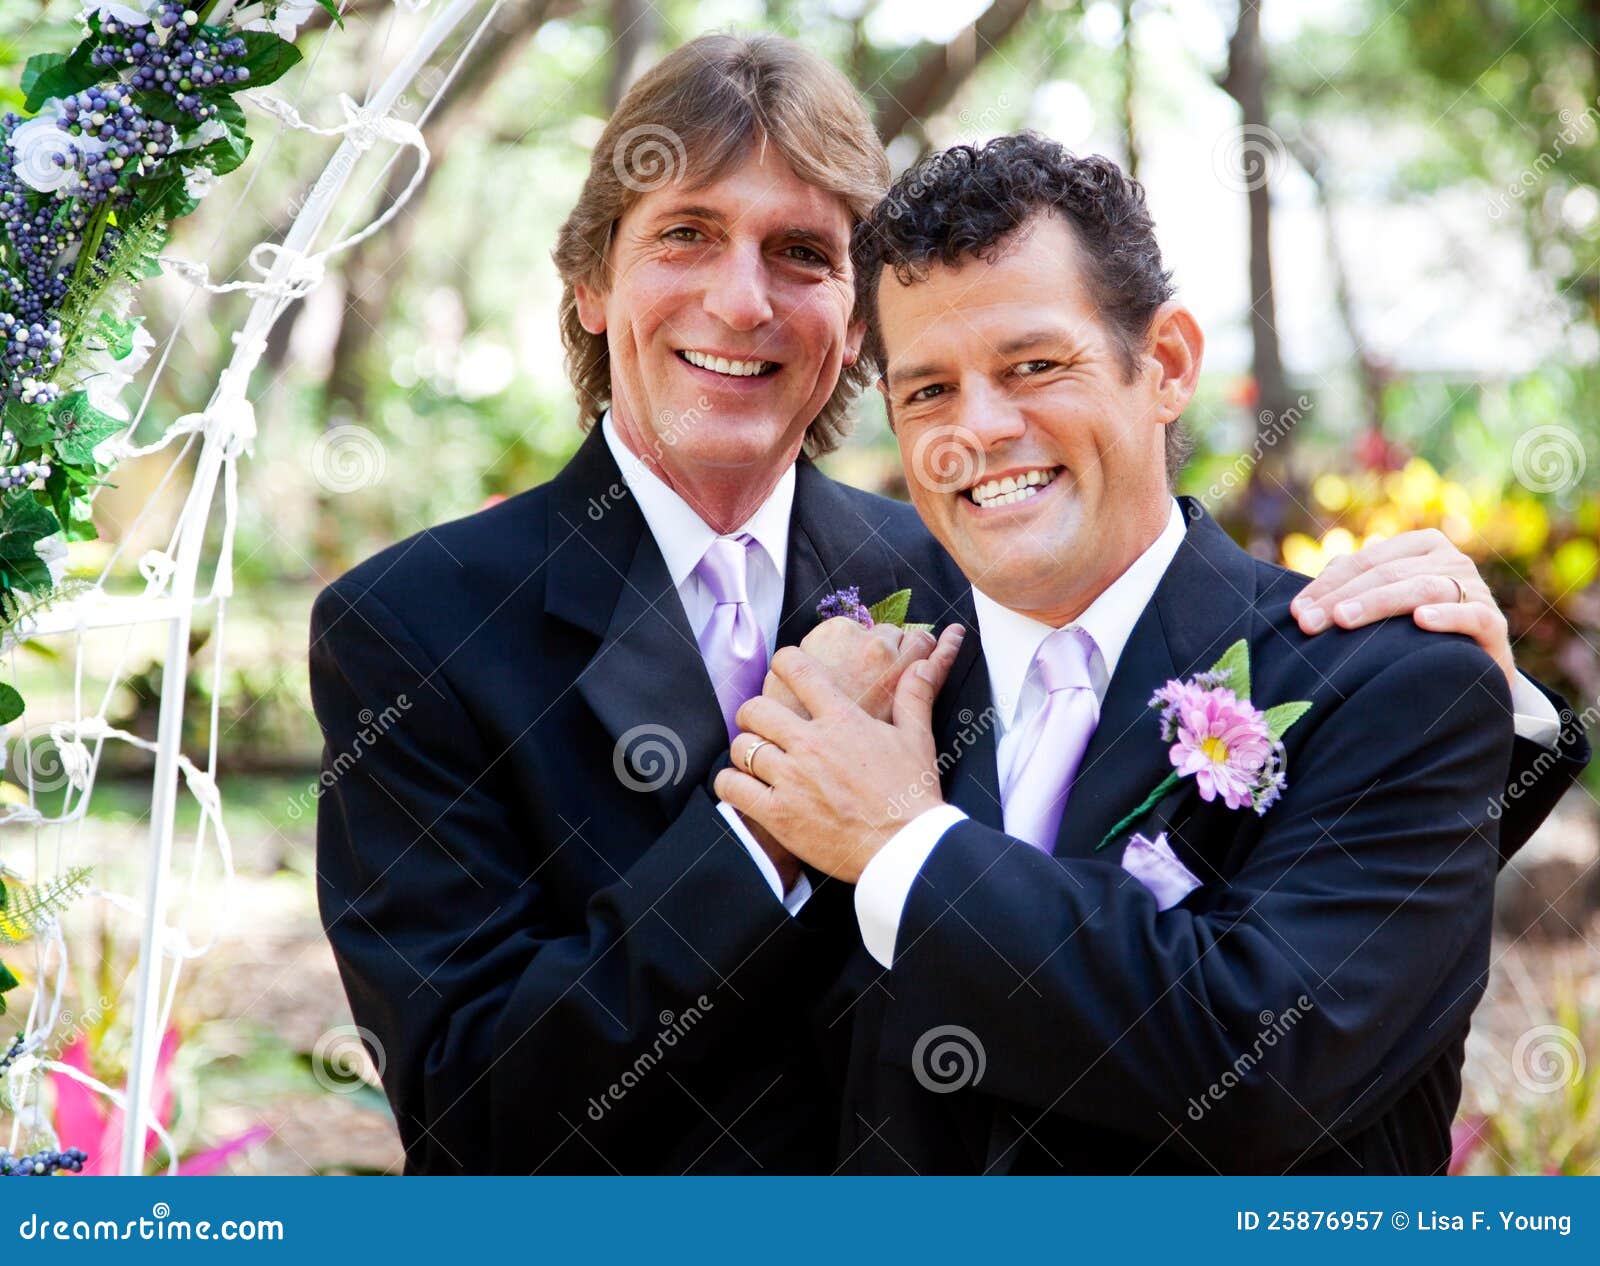 gay couple - wedding portrait